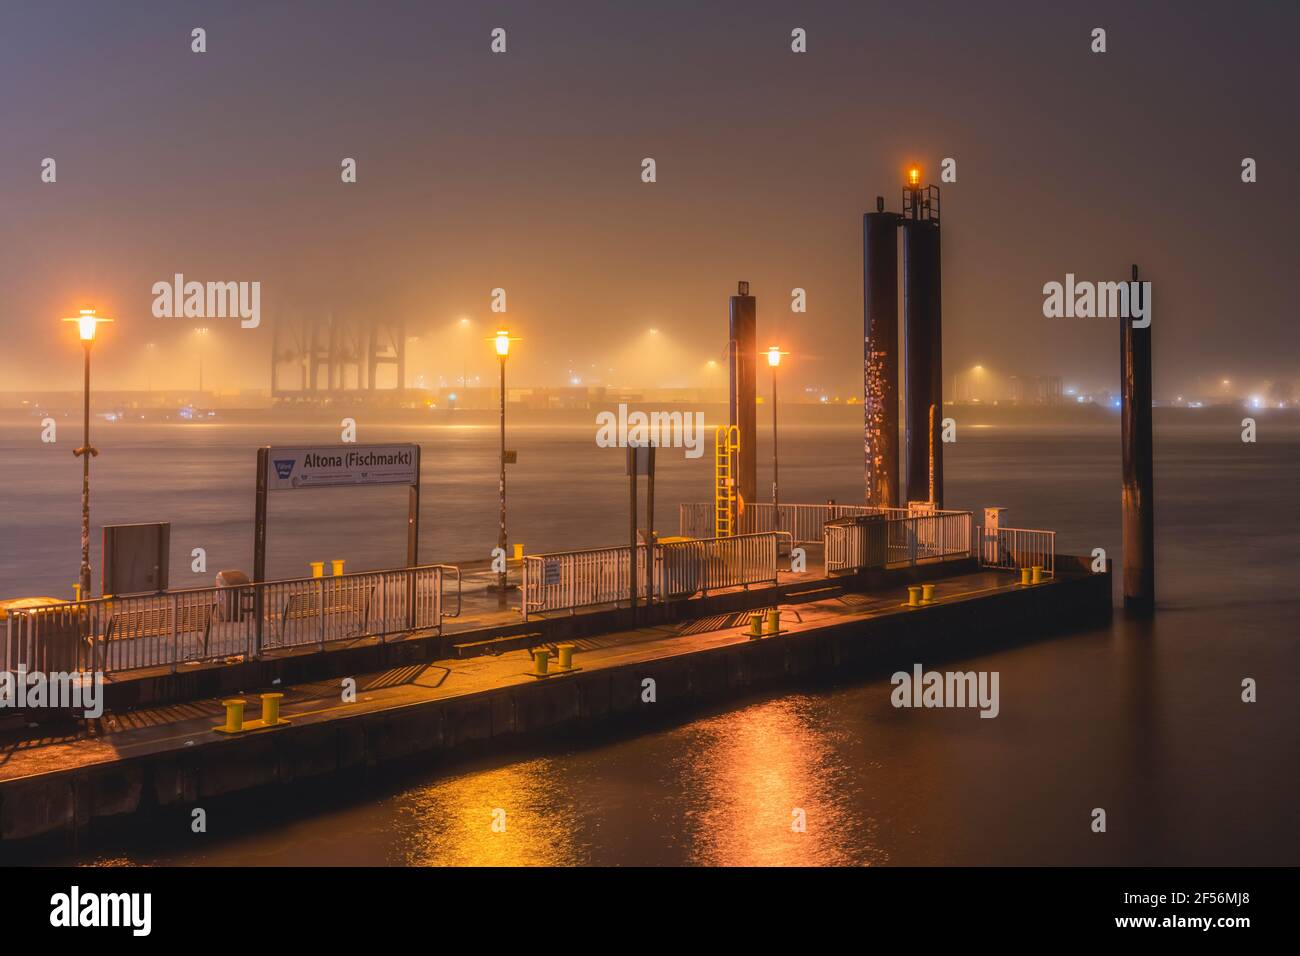 Germany, Hamburg, Angler fish market in fog at night Stock Photo